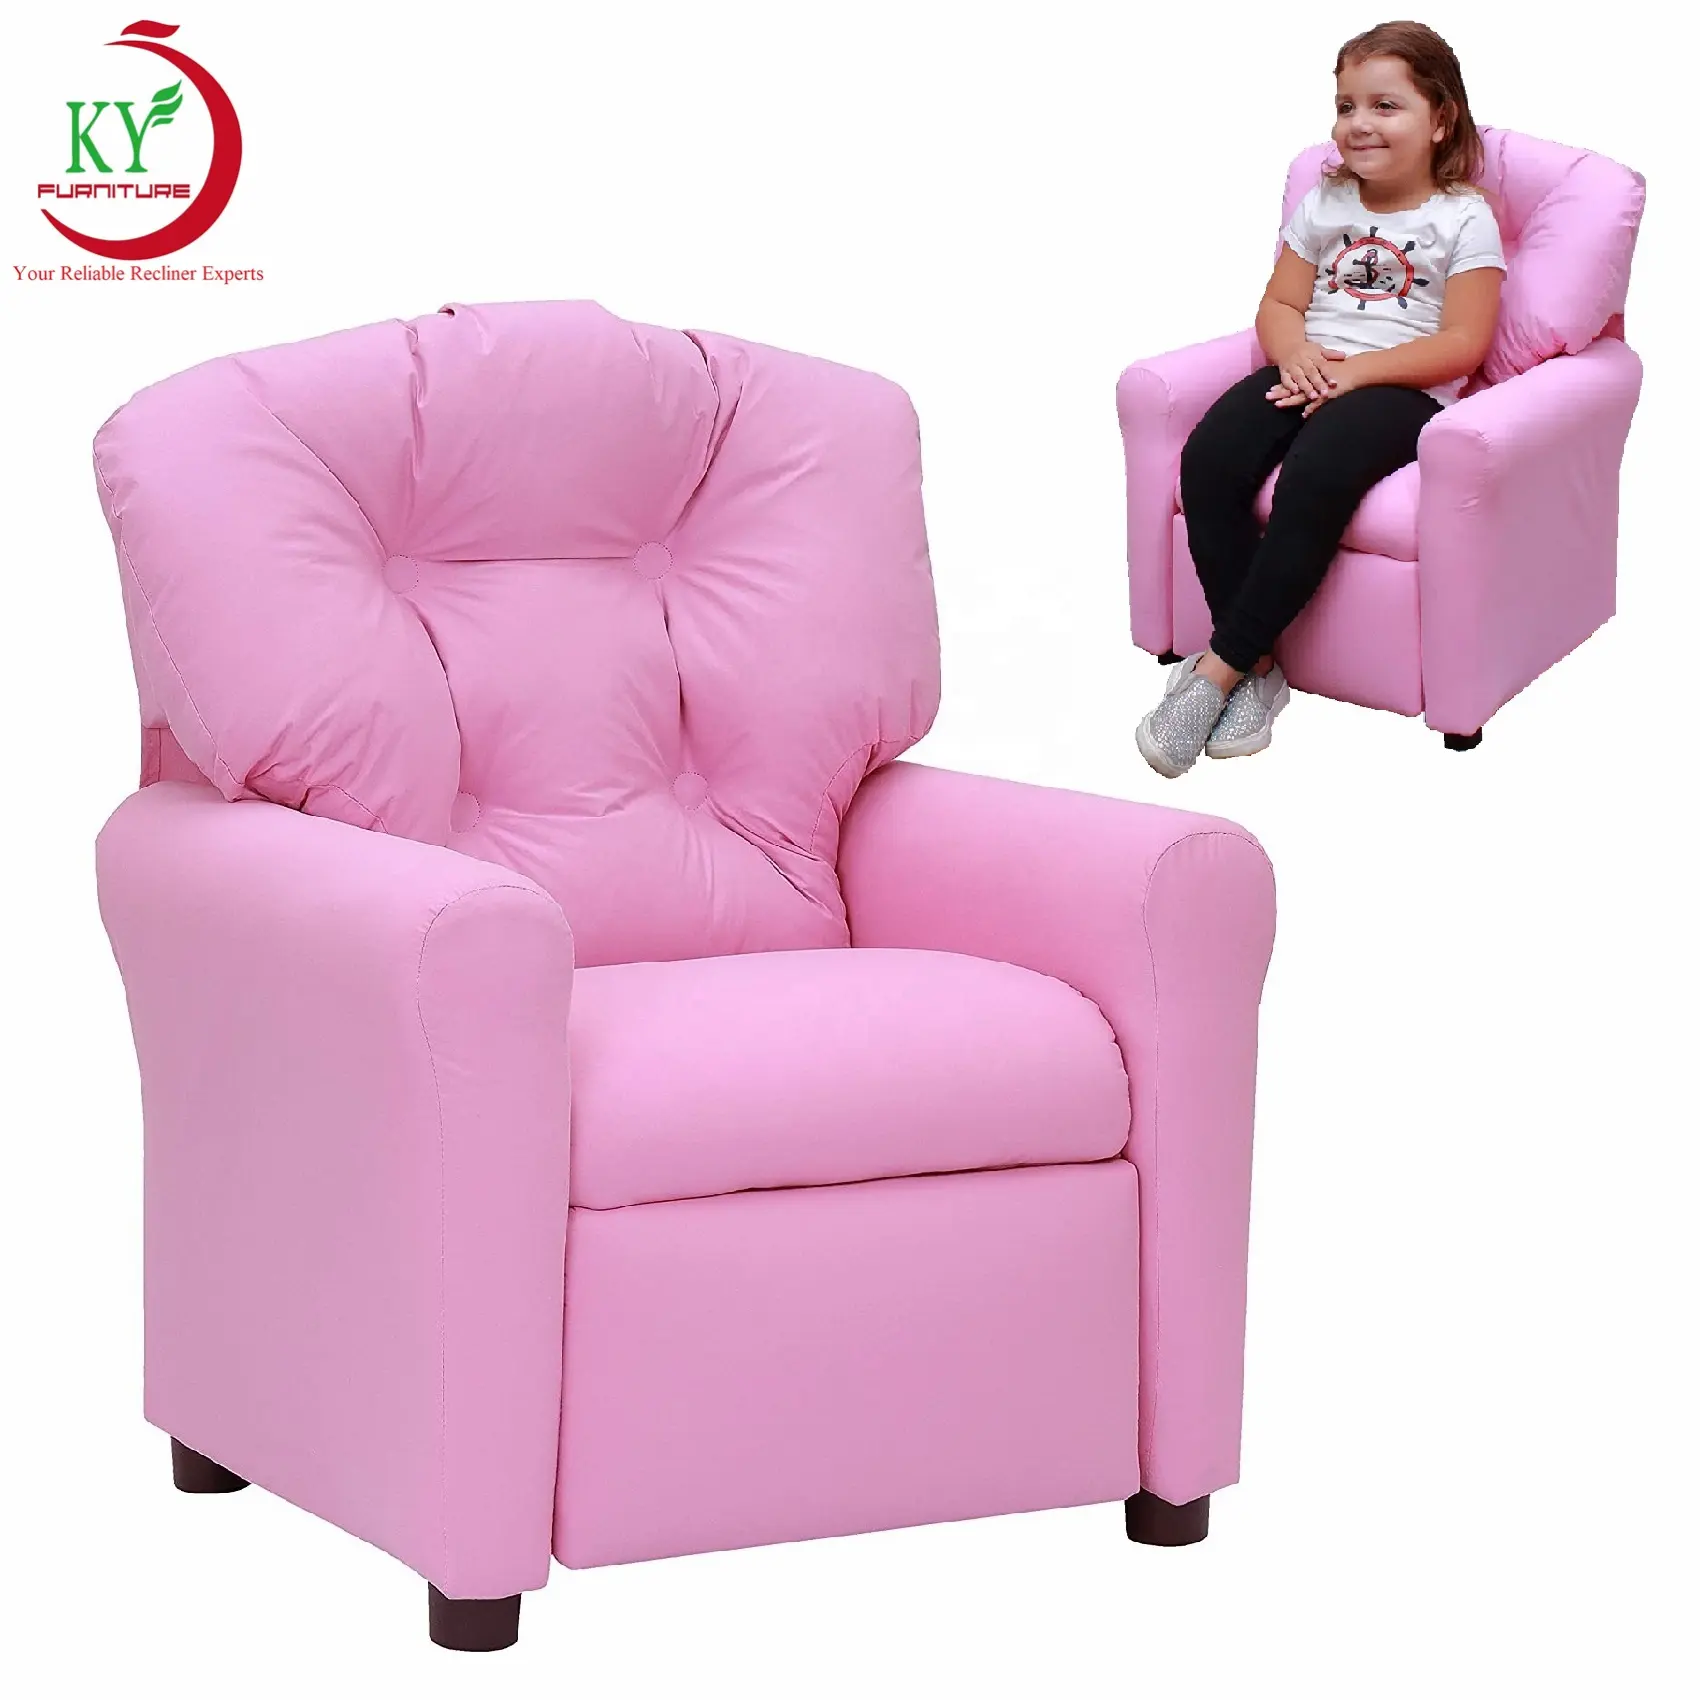 Sedia reclinabile per bambini Push Back manuale in pelle dolce JKY Furniture